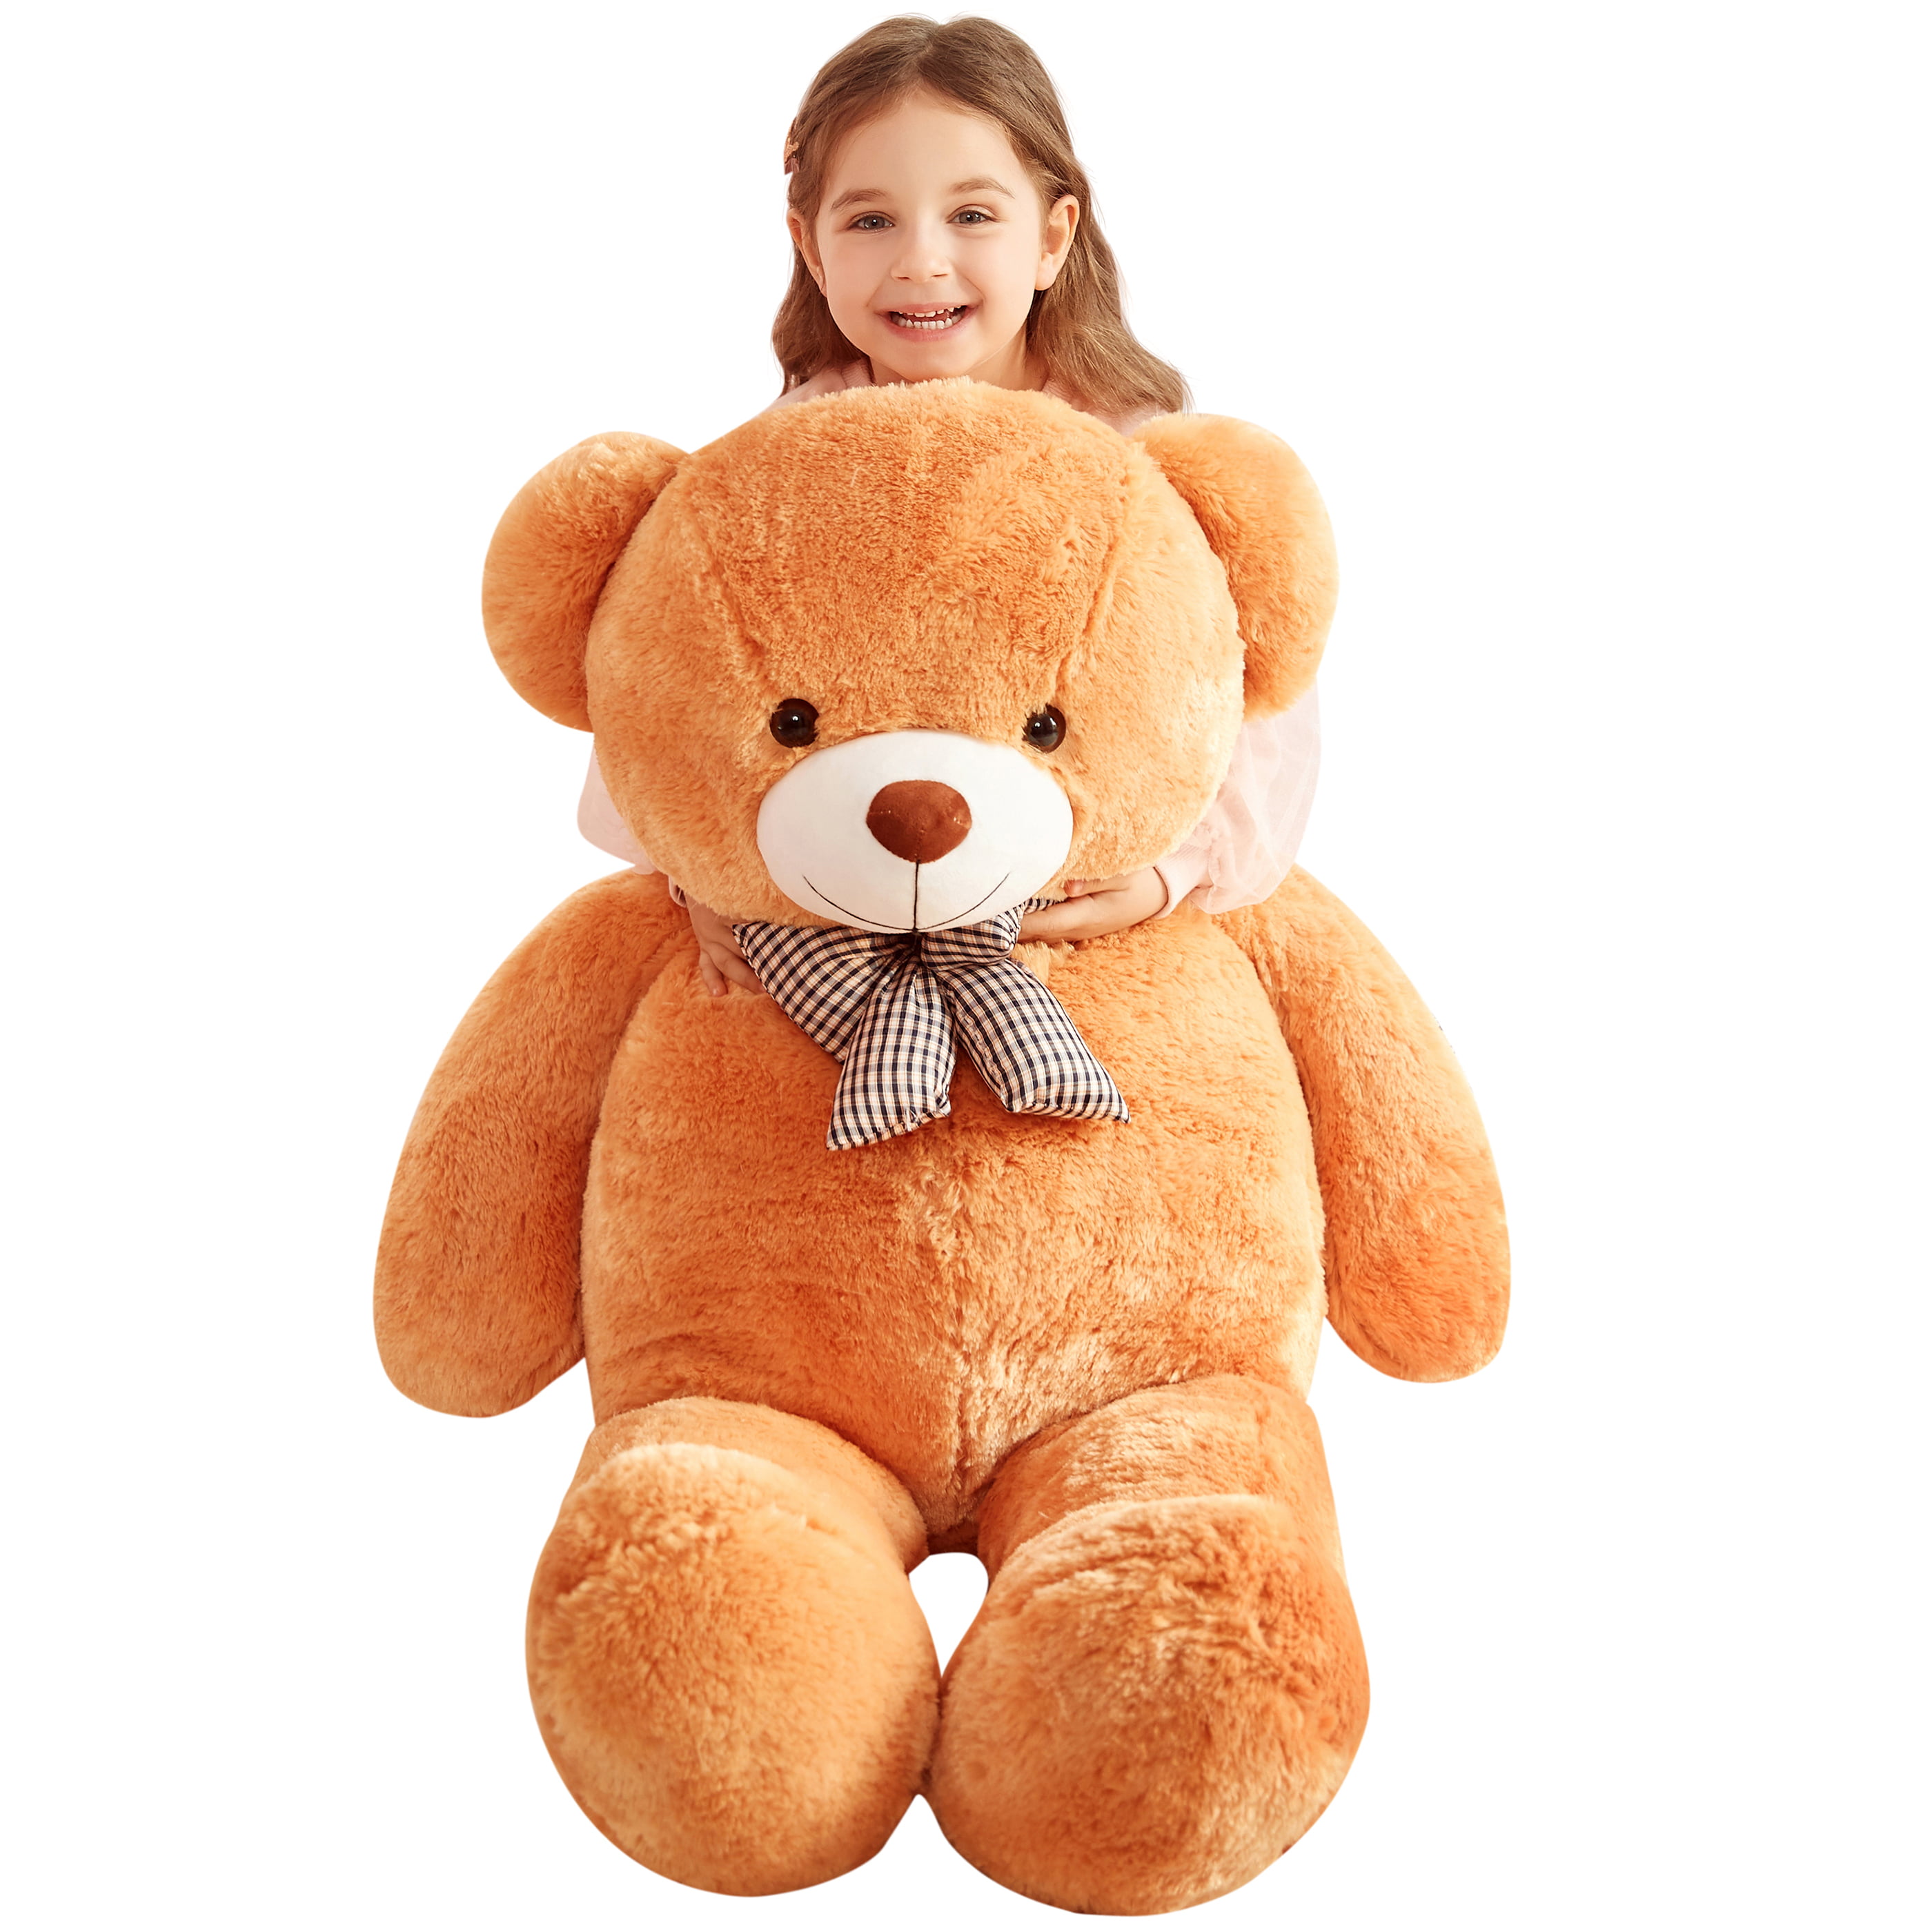 Giant Plush Teddy Bear 47" Stuffed Animal Soft Toy Huge Large Jumbo Gift New 